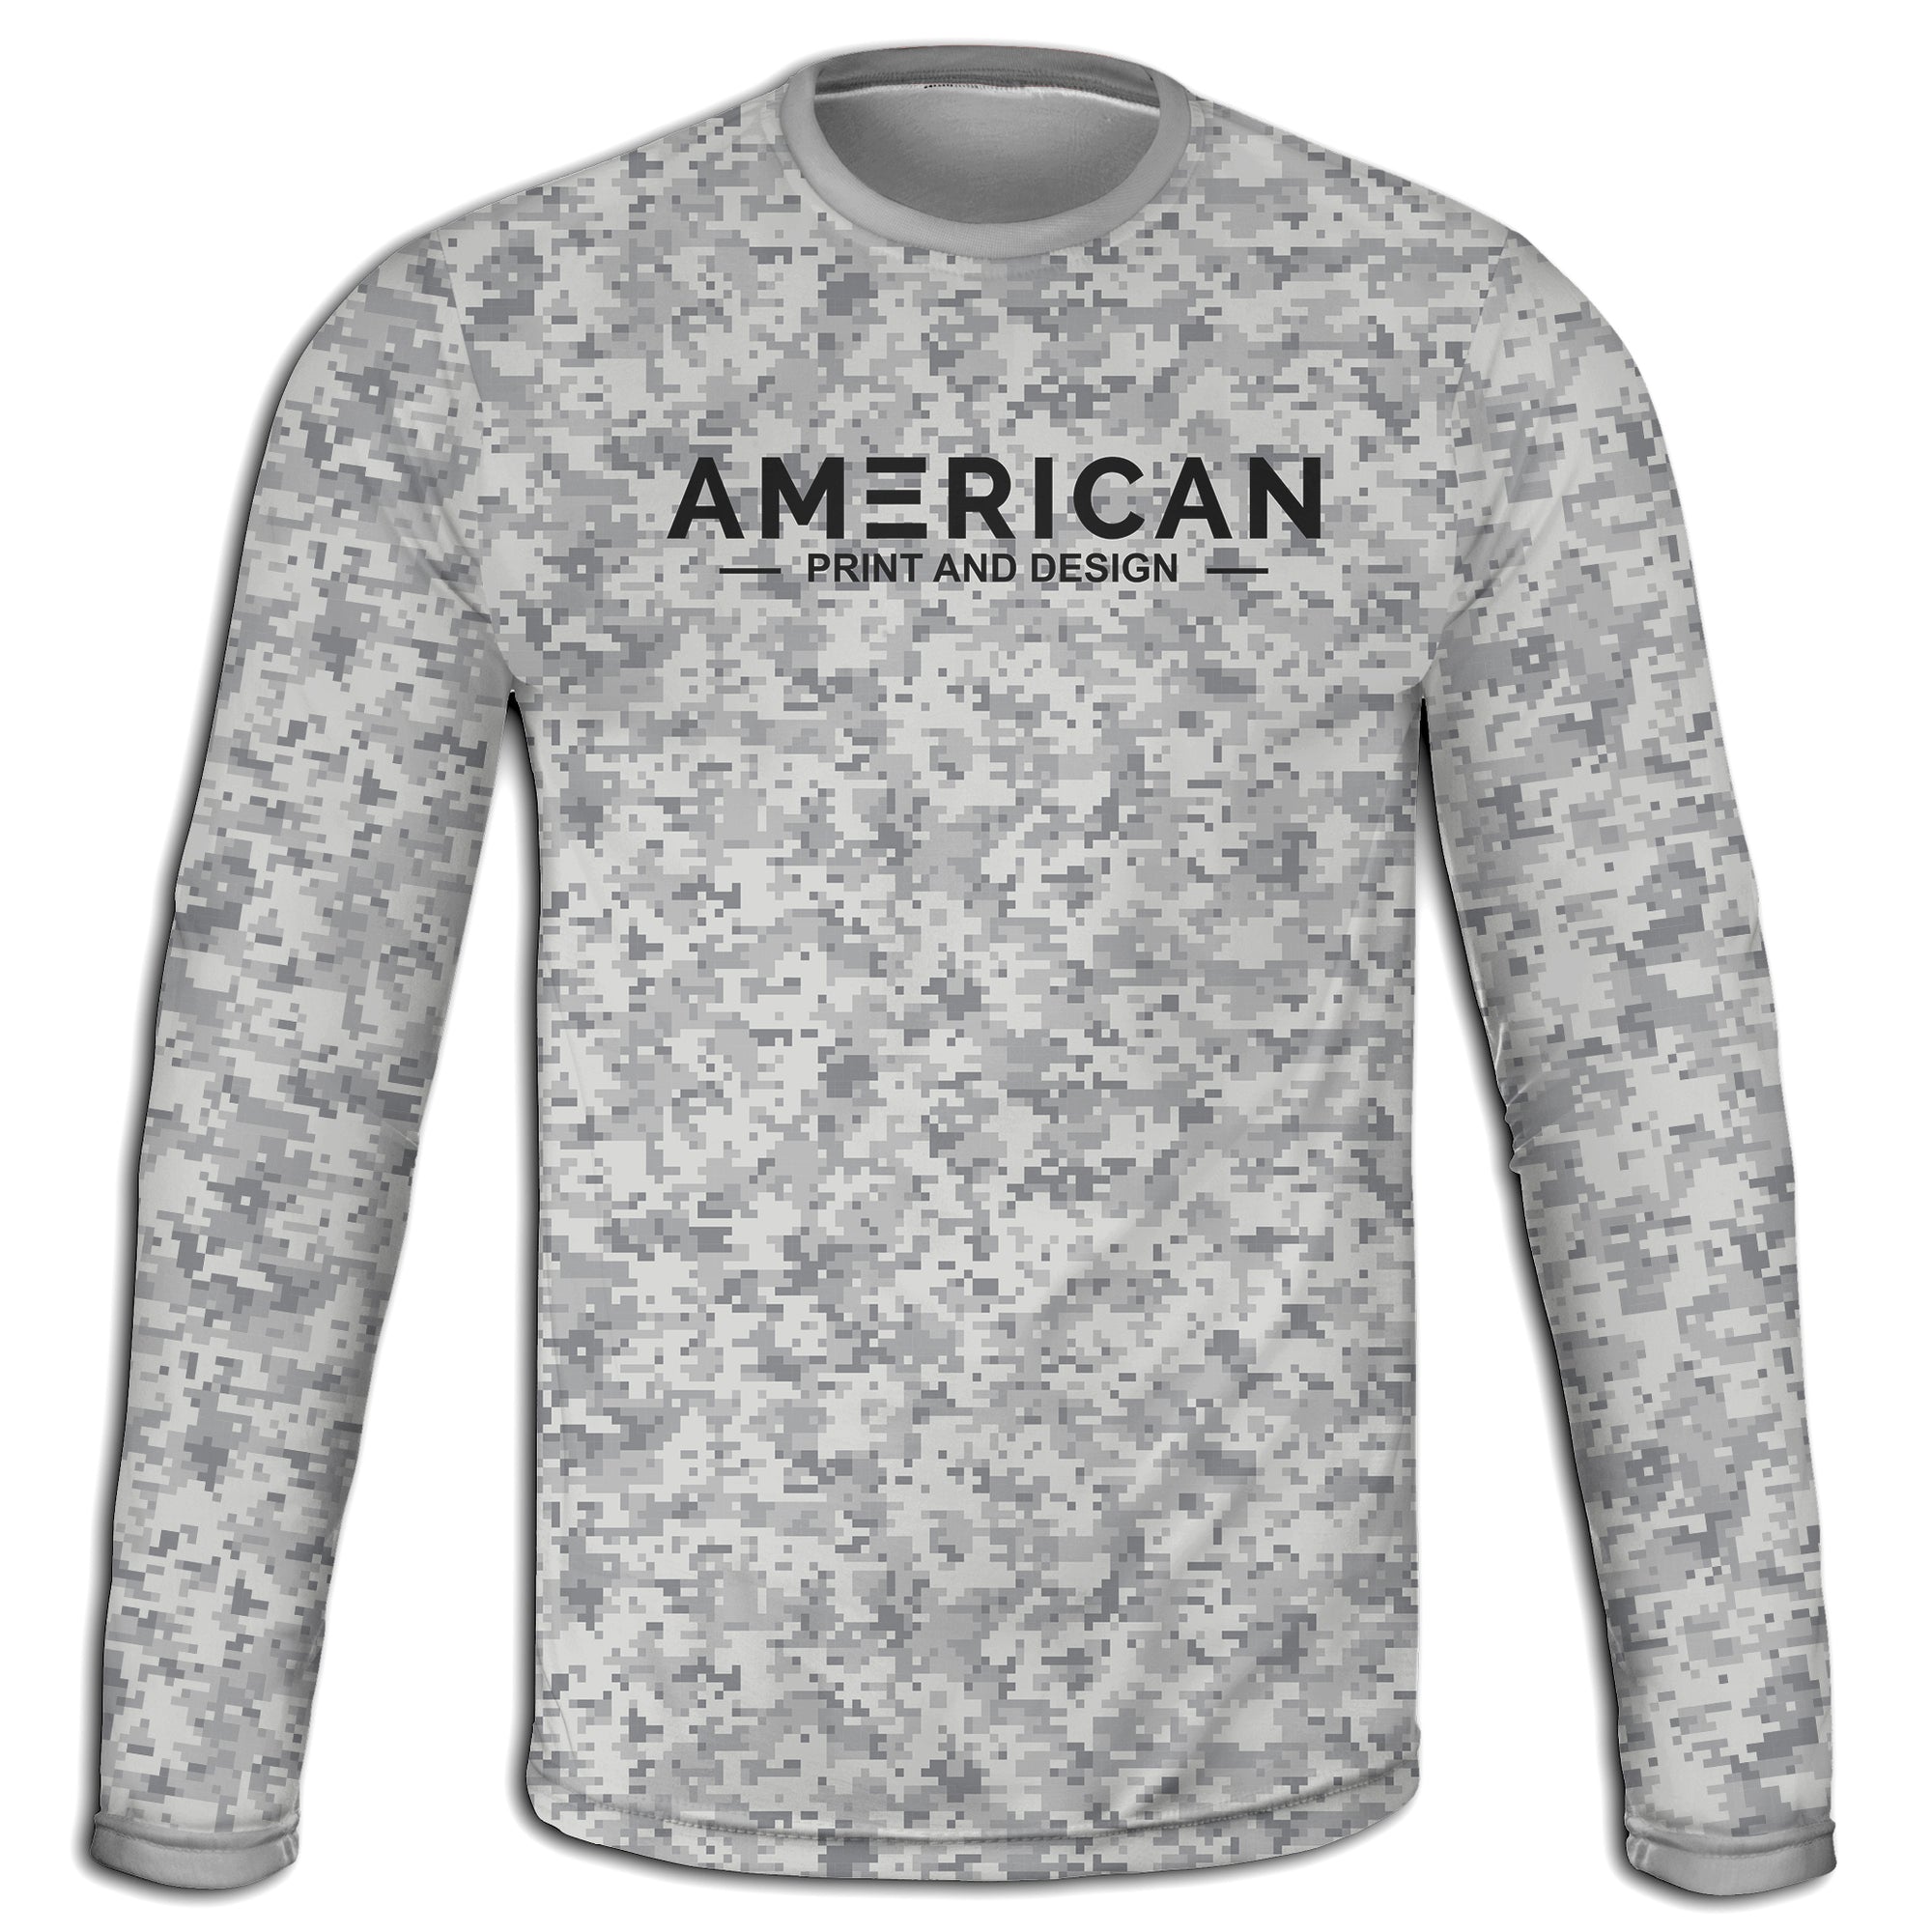 American Print and Design - Men's Camo Long Sleeve Tee